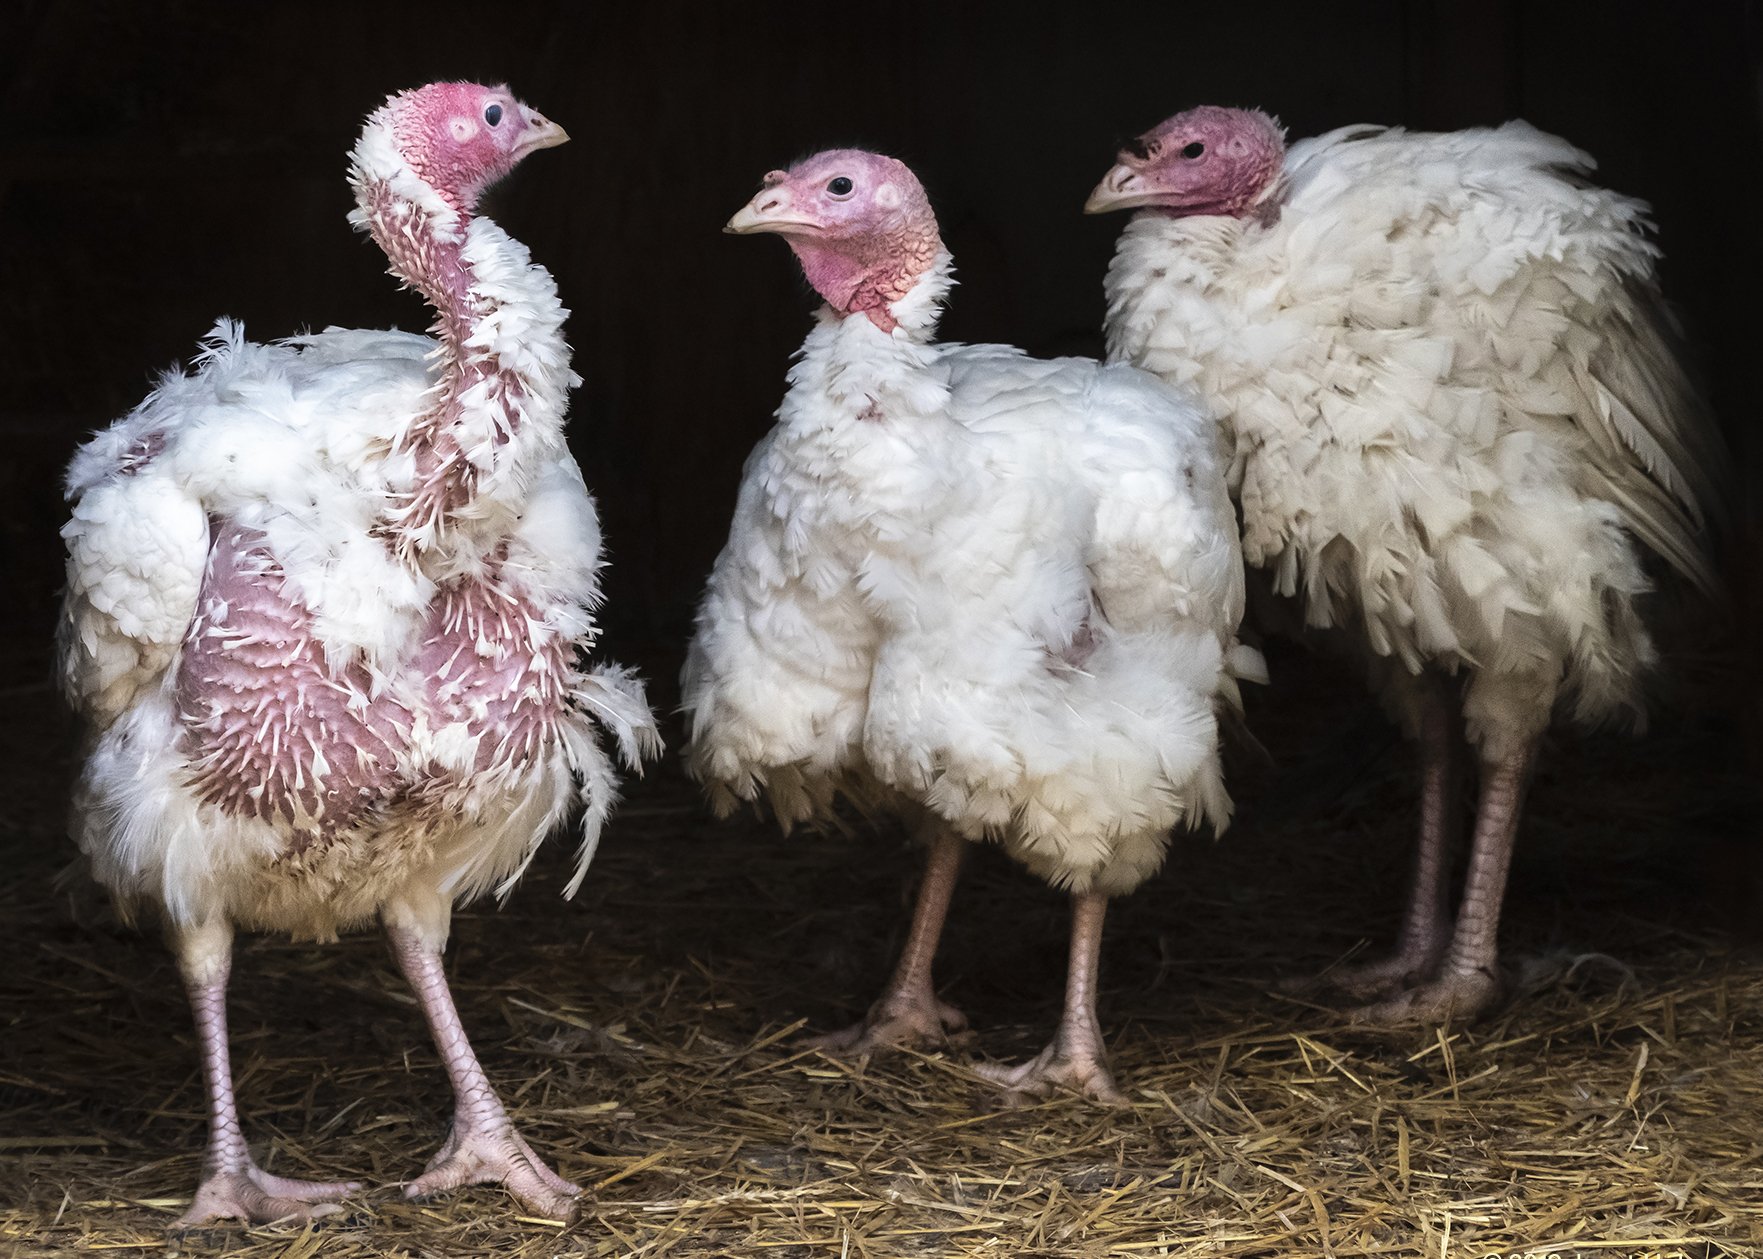 Rescued "Thanksgiving" turkeys (near Chicago)